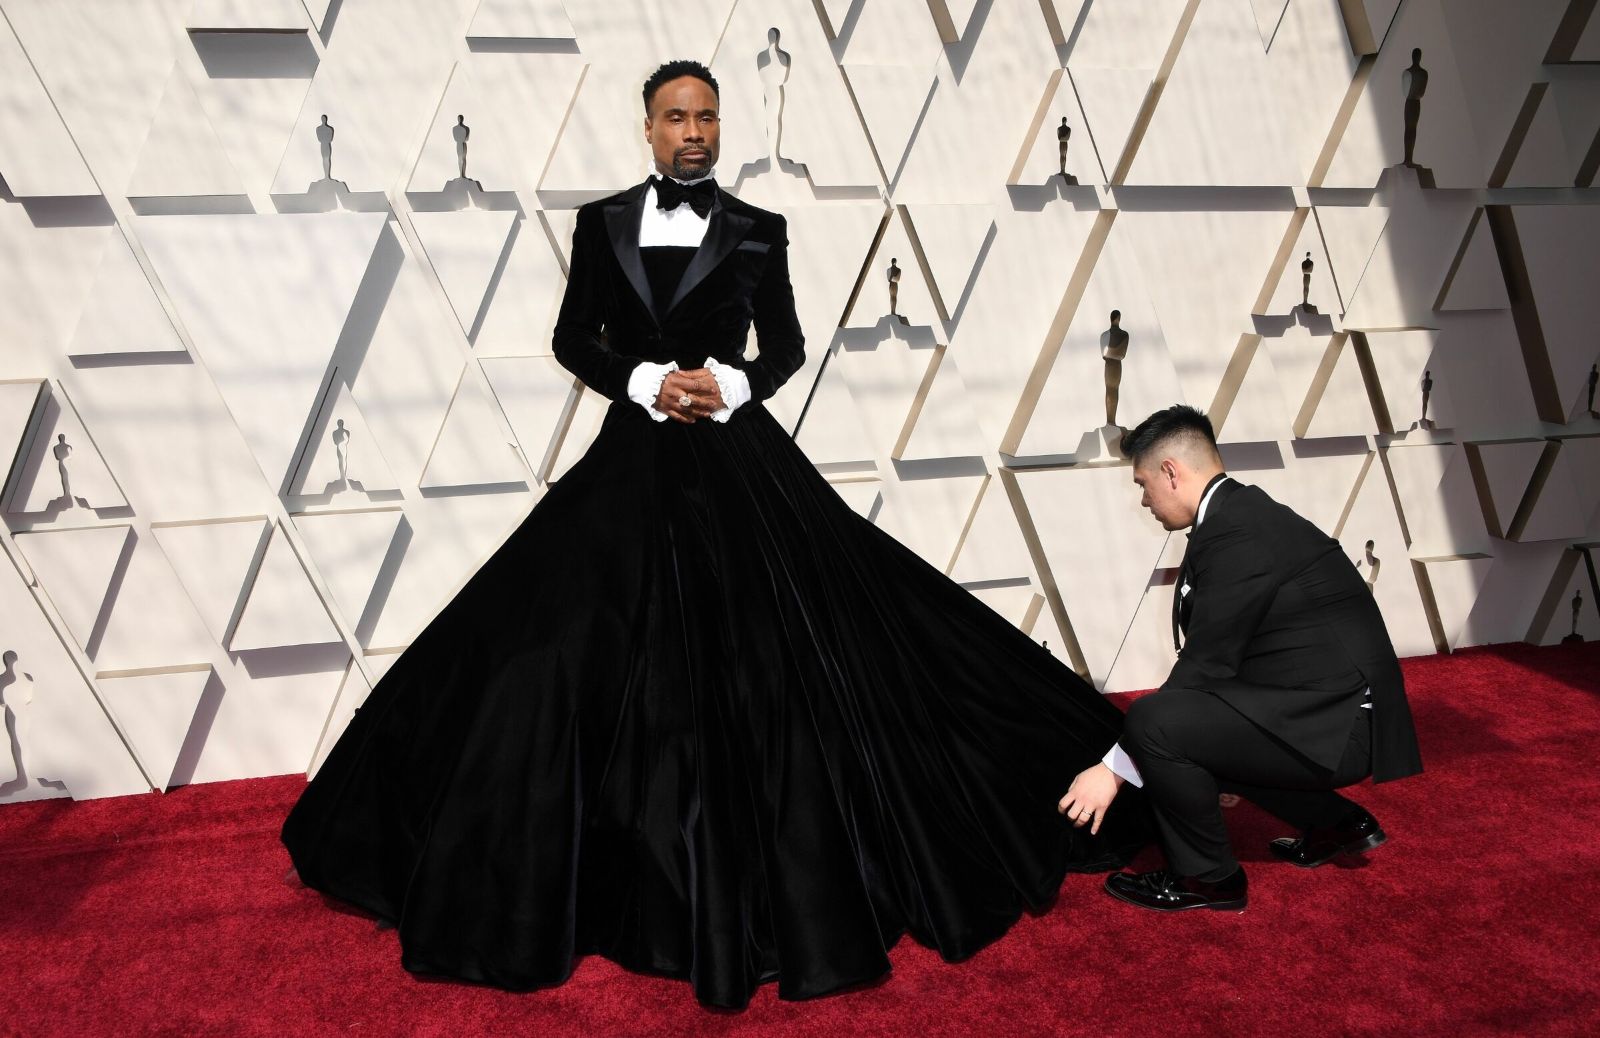 Oscar 2019, i look promossi e bocciati sul red carpet